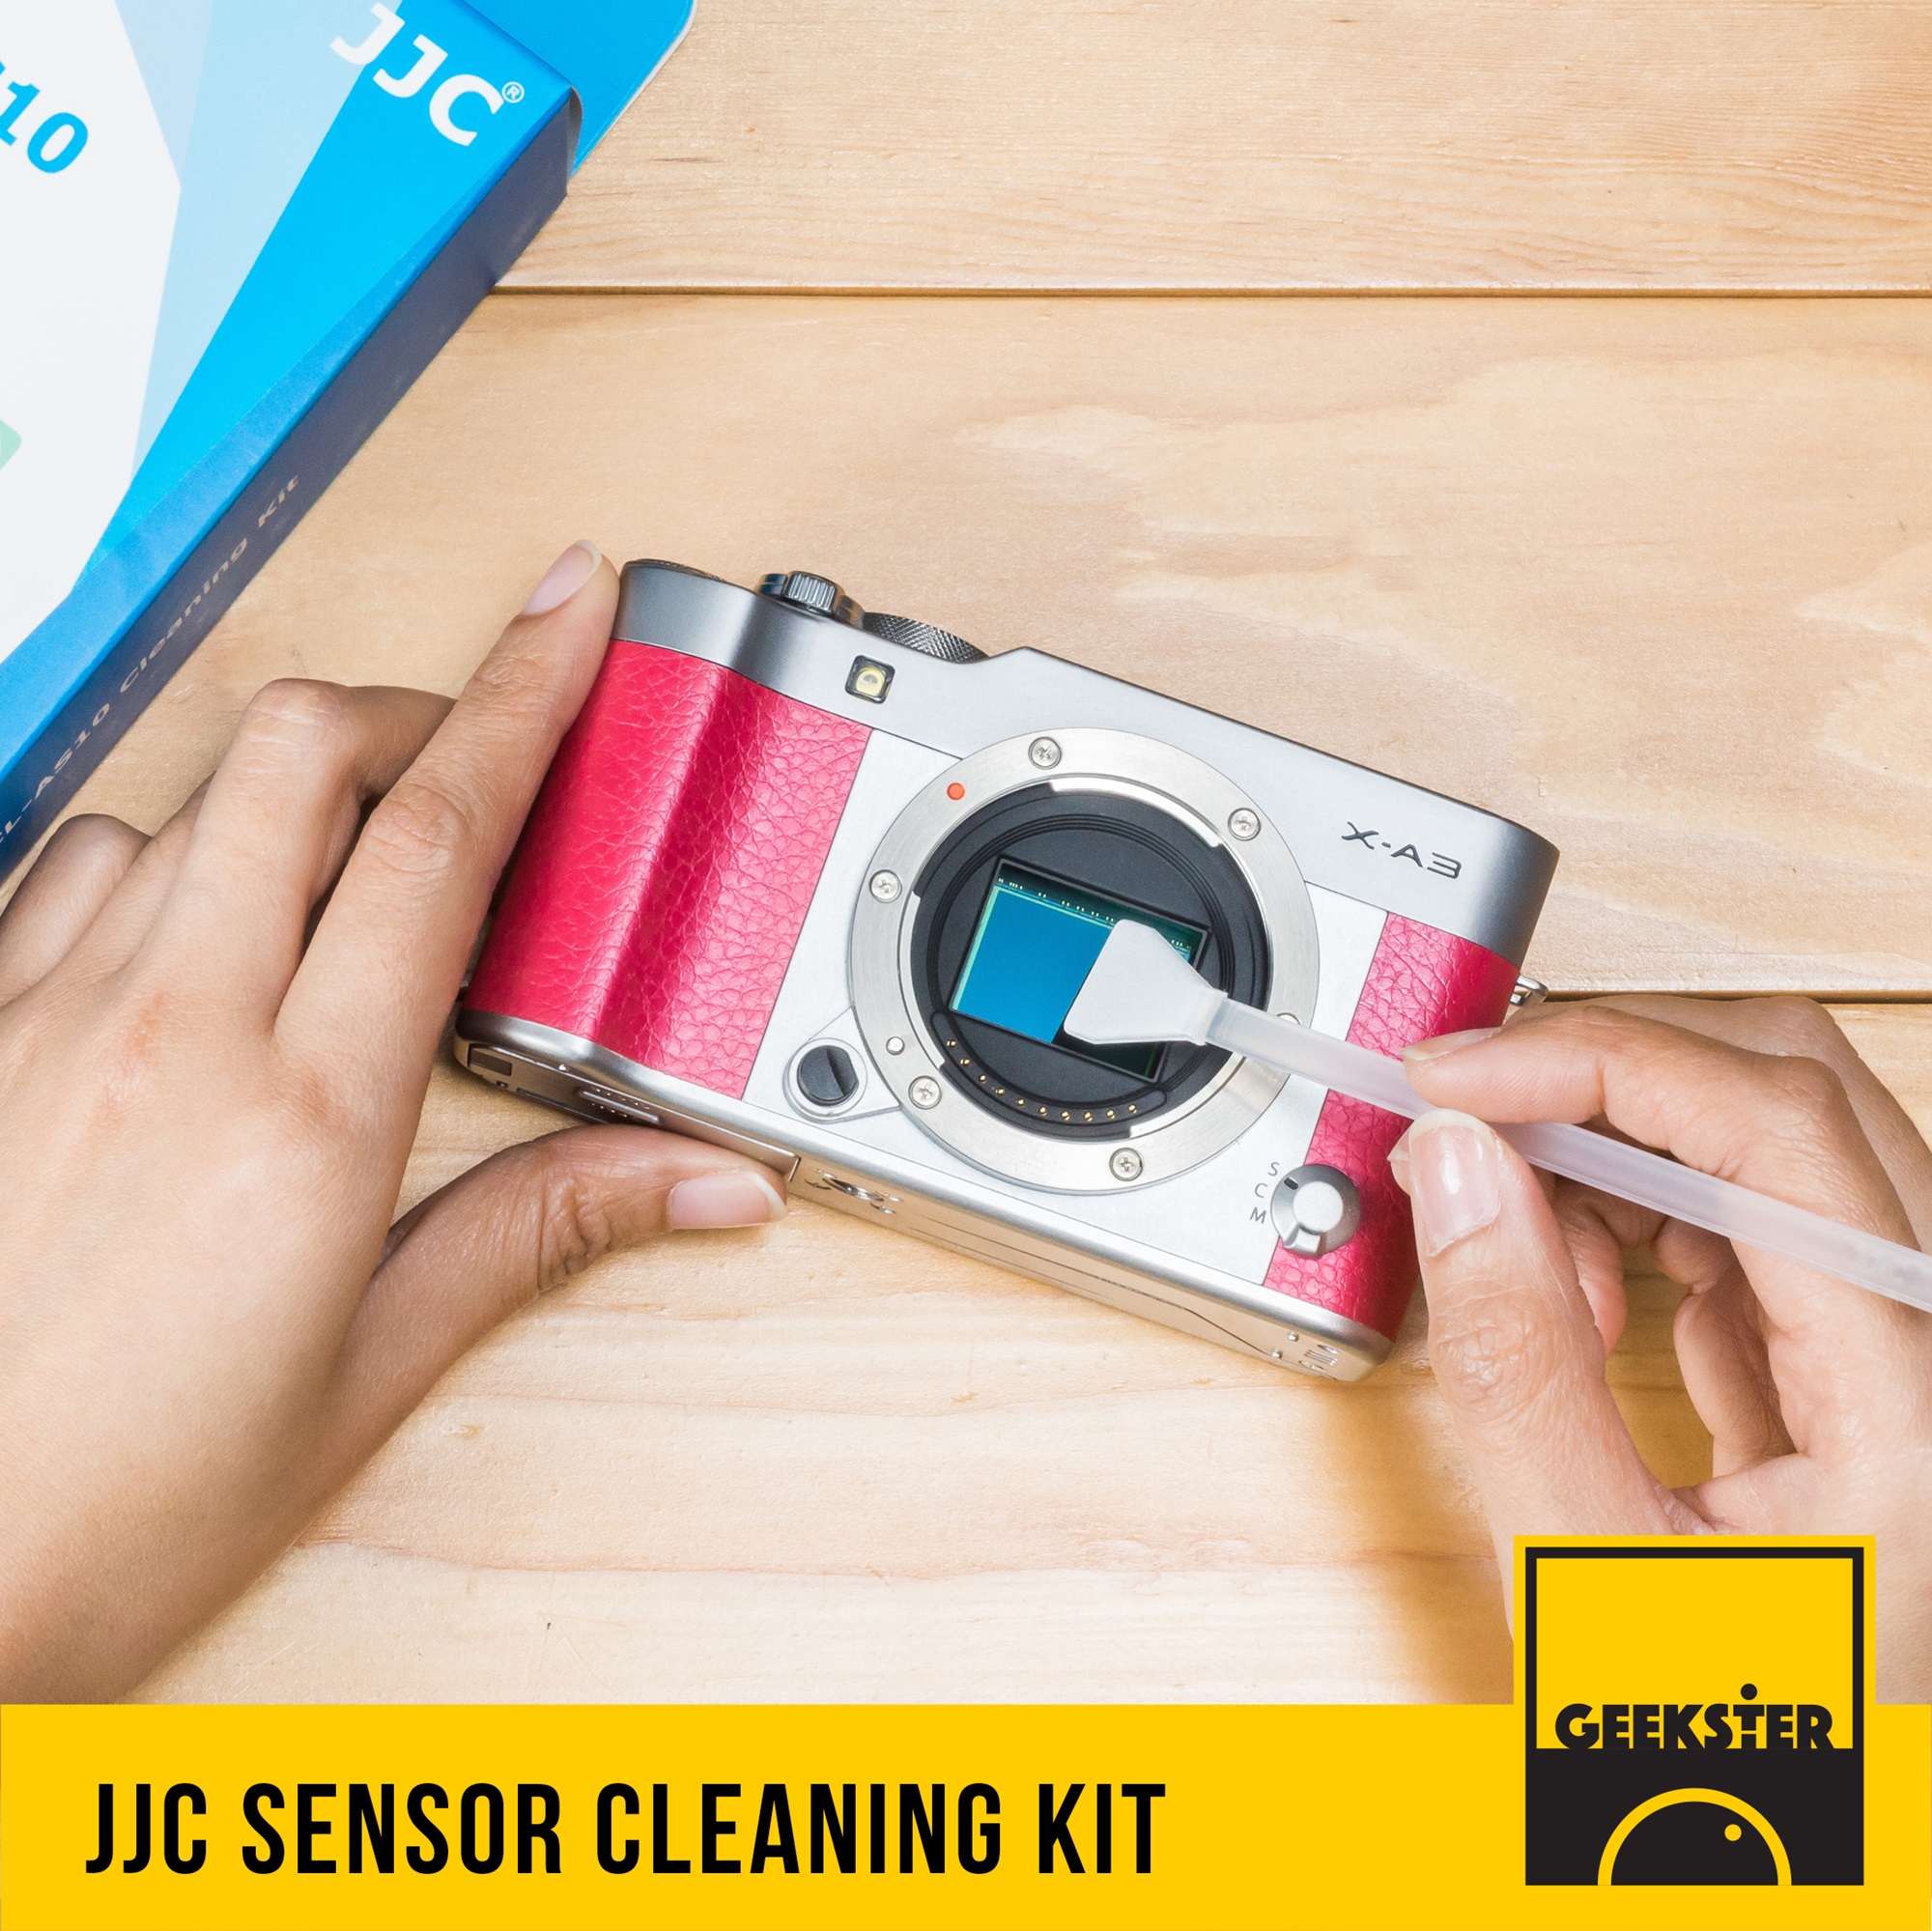 JJC Sensor Cleaning Kit 10pcs ( ชุดทำความสะอาด ทำความสะอาด เซ็นเซอร์ ) ( Geekster )